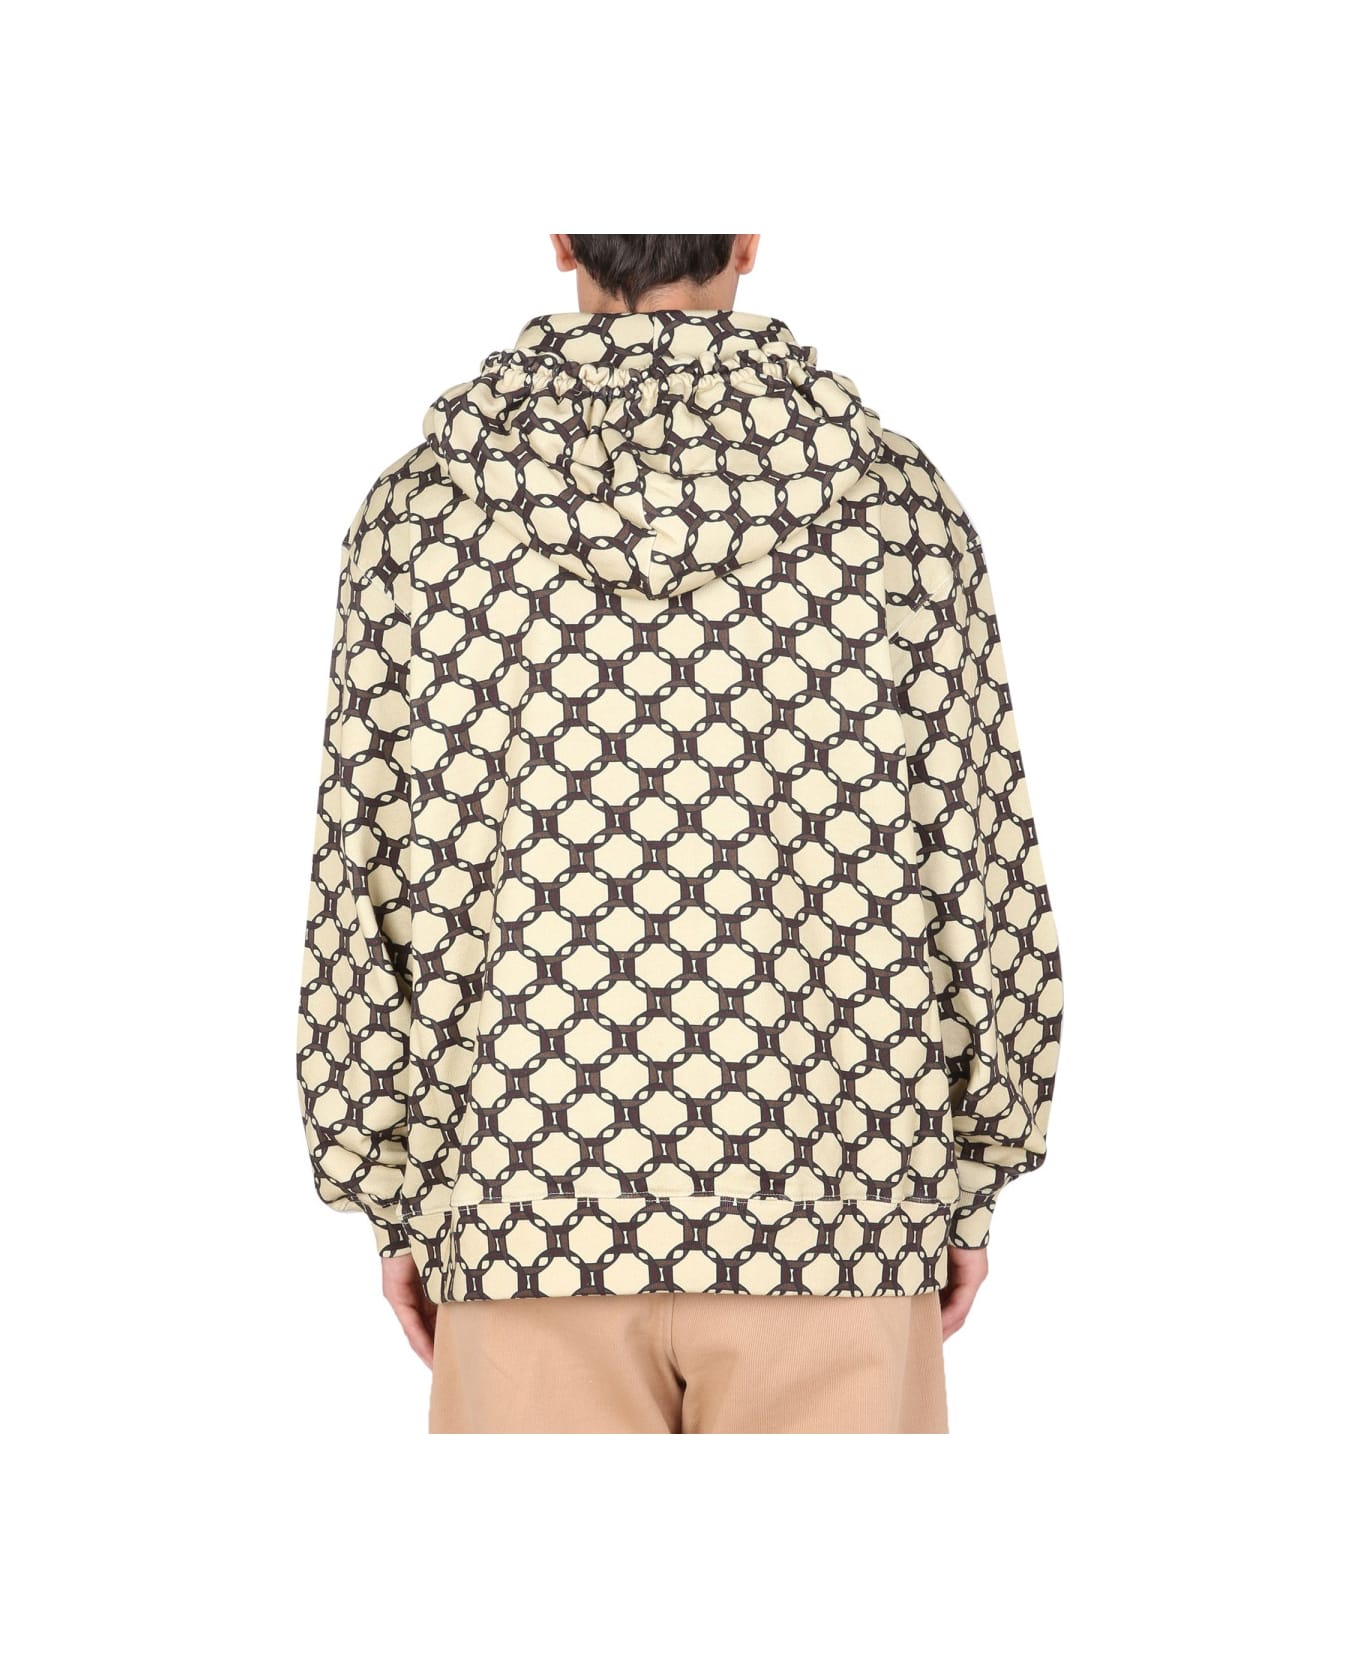 Dries Van Noten Sweatshirt With Geometric Print - POWDER